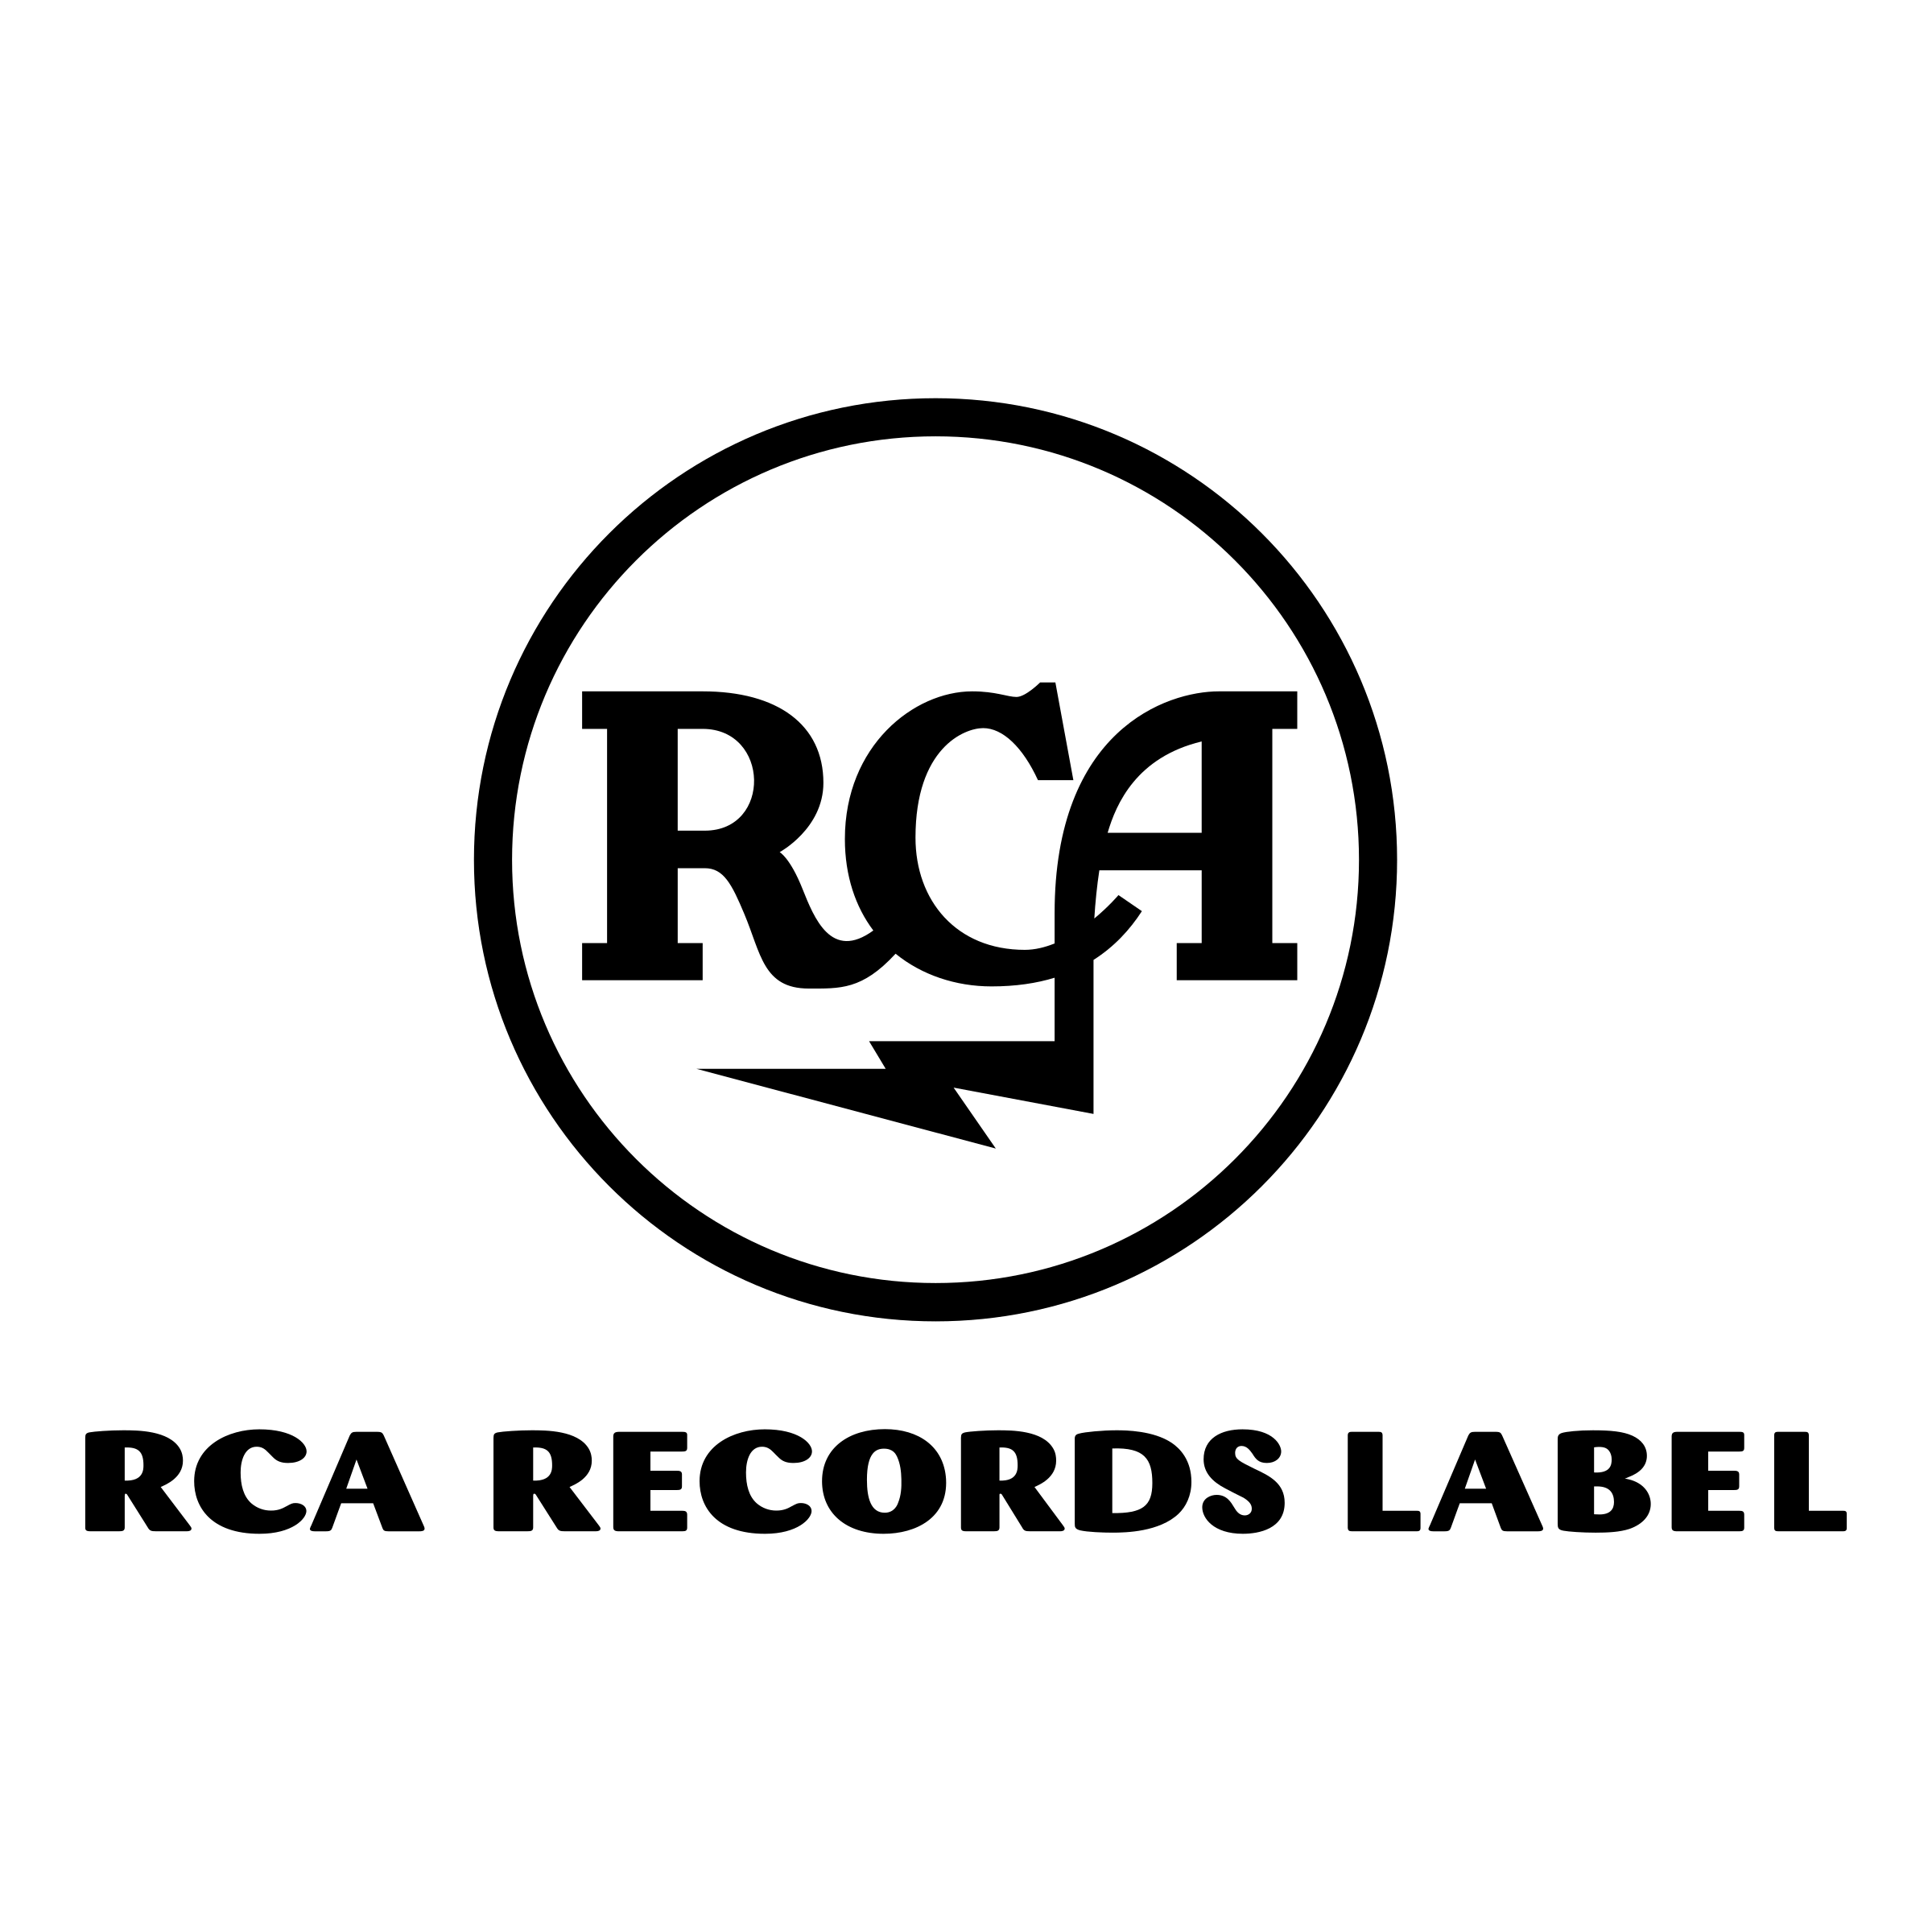 RCA Logo - RCA Logo PNG Transparent & SVG Vector - Freebie Supply